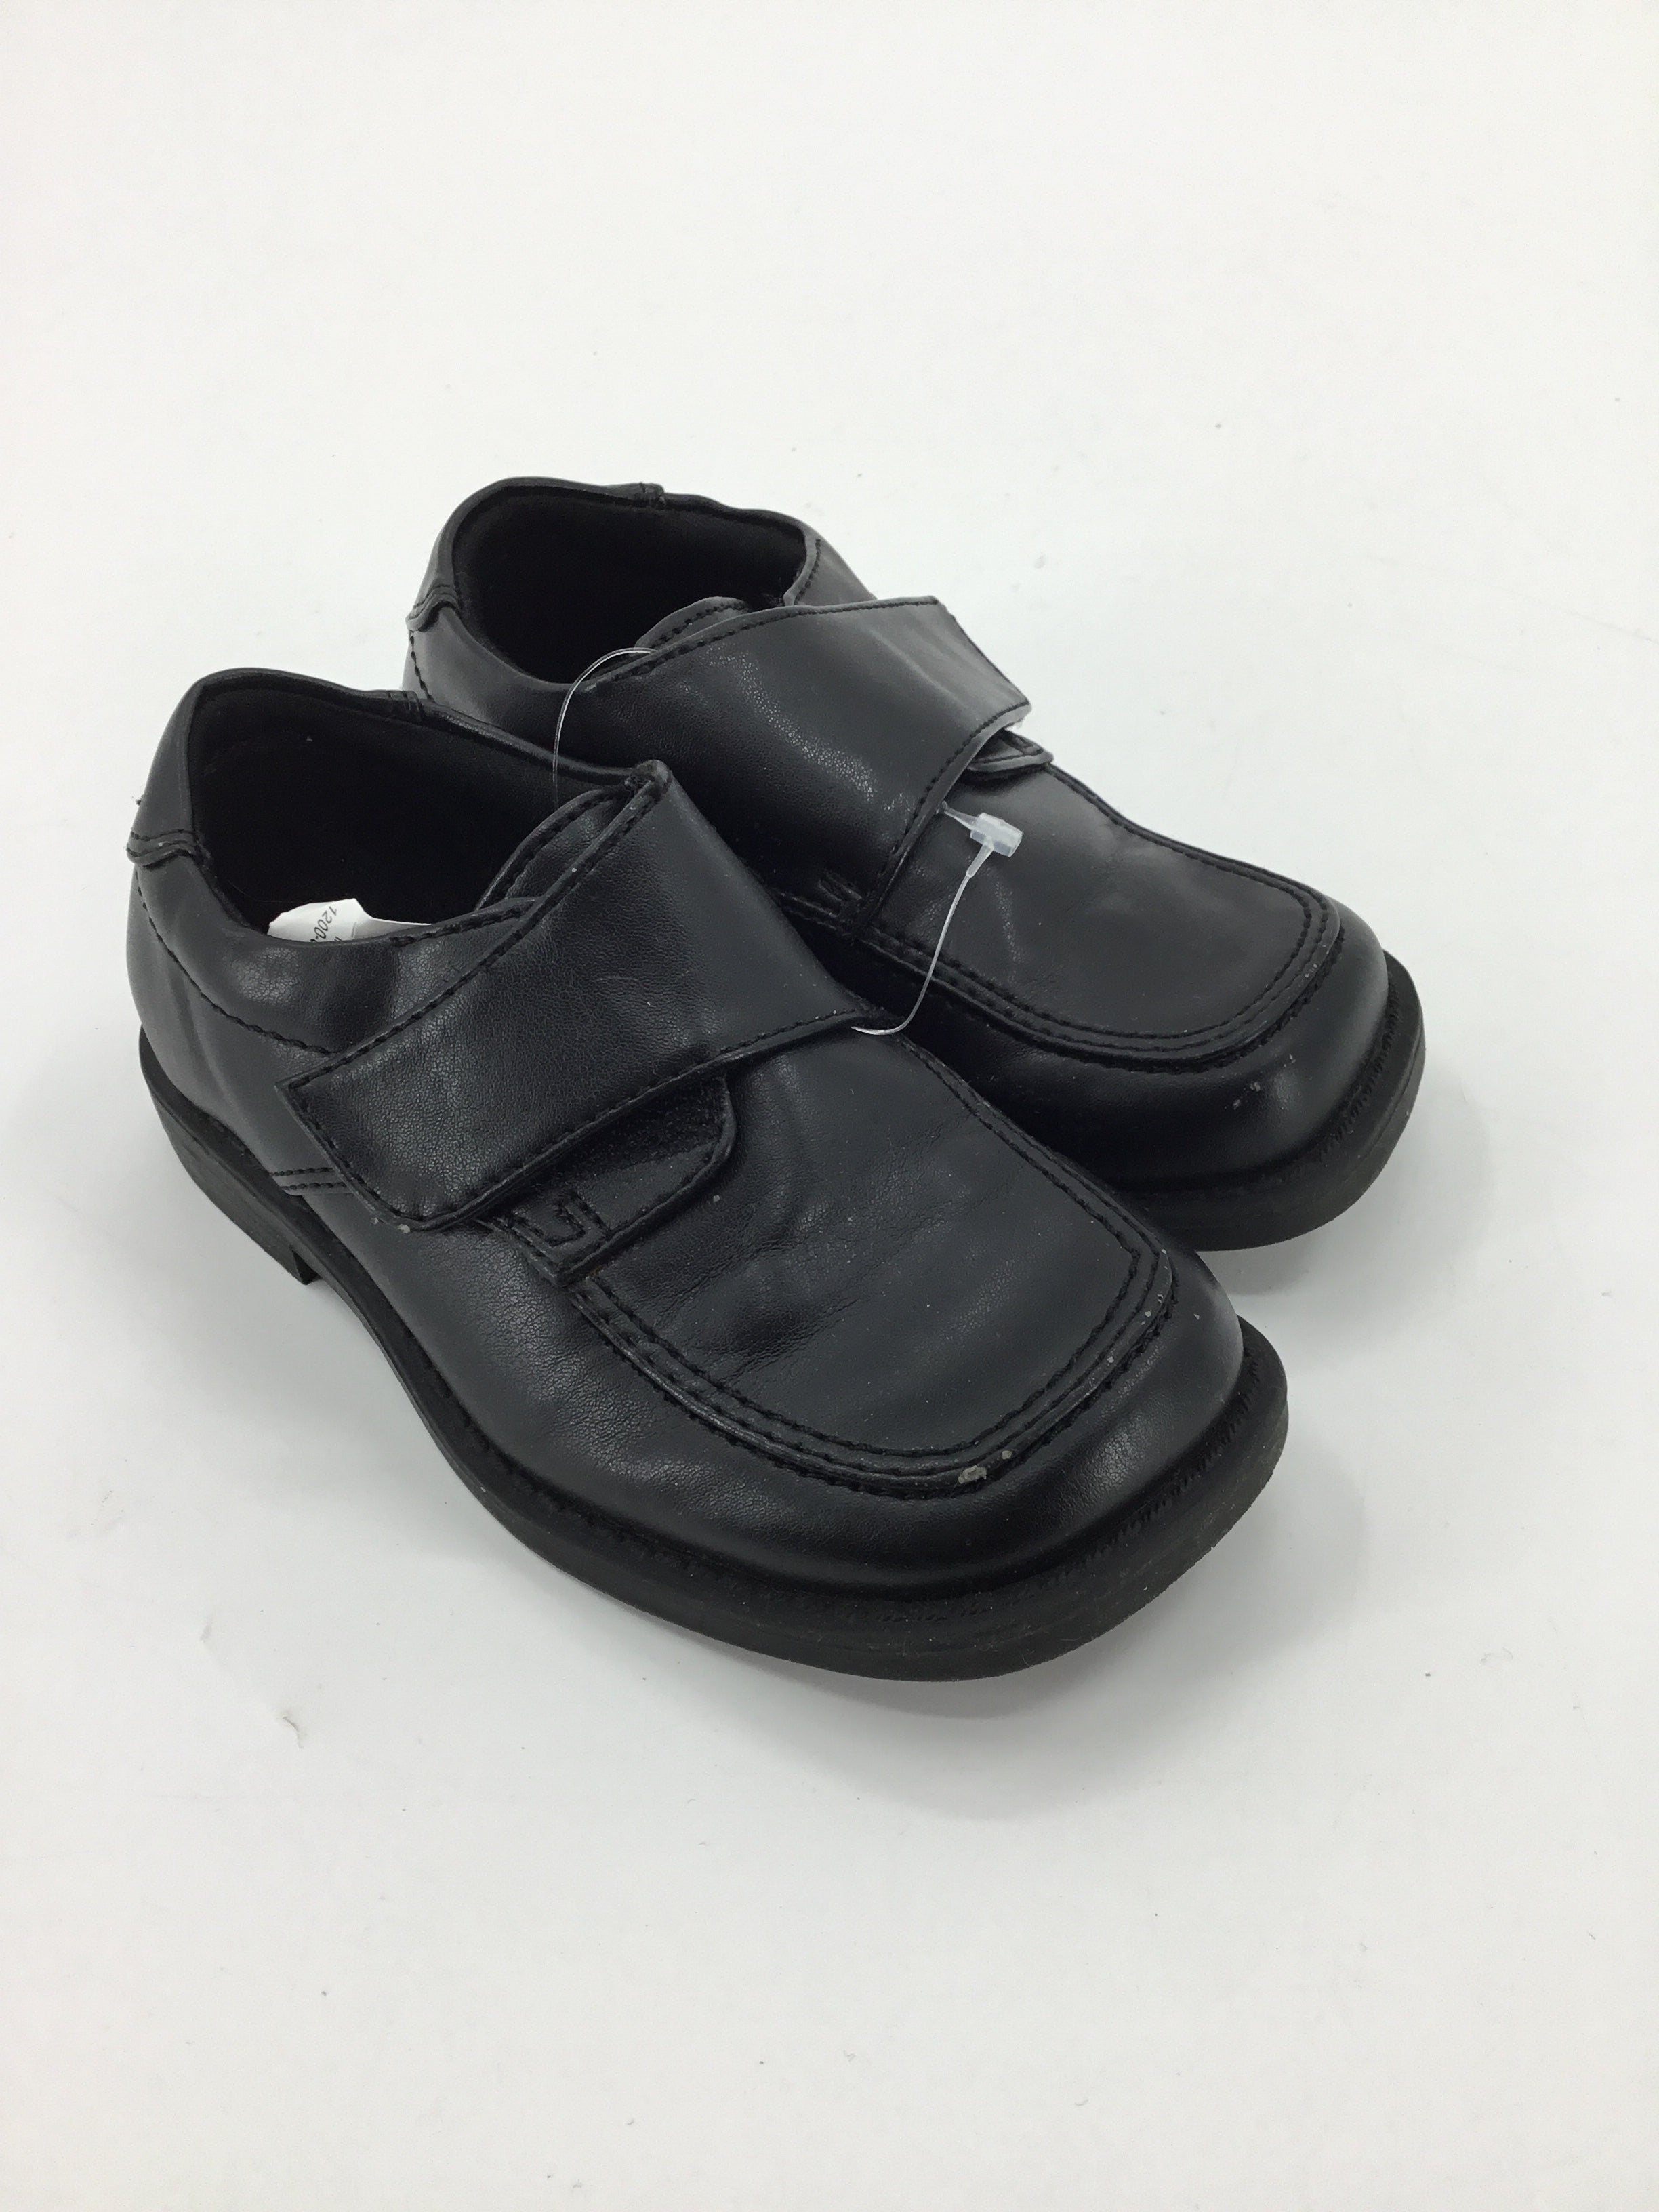 Smart Fit Child Size 9 Toddler Black Dress Shoes